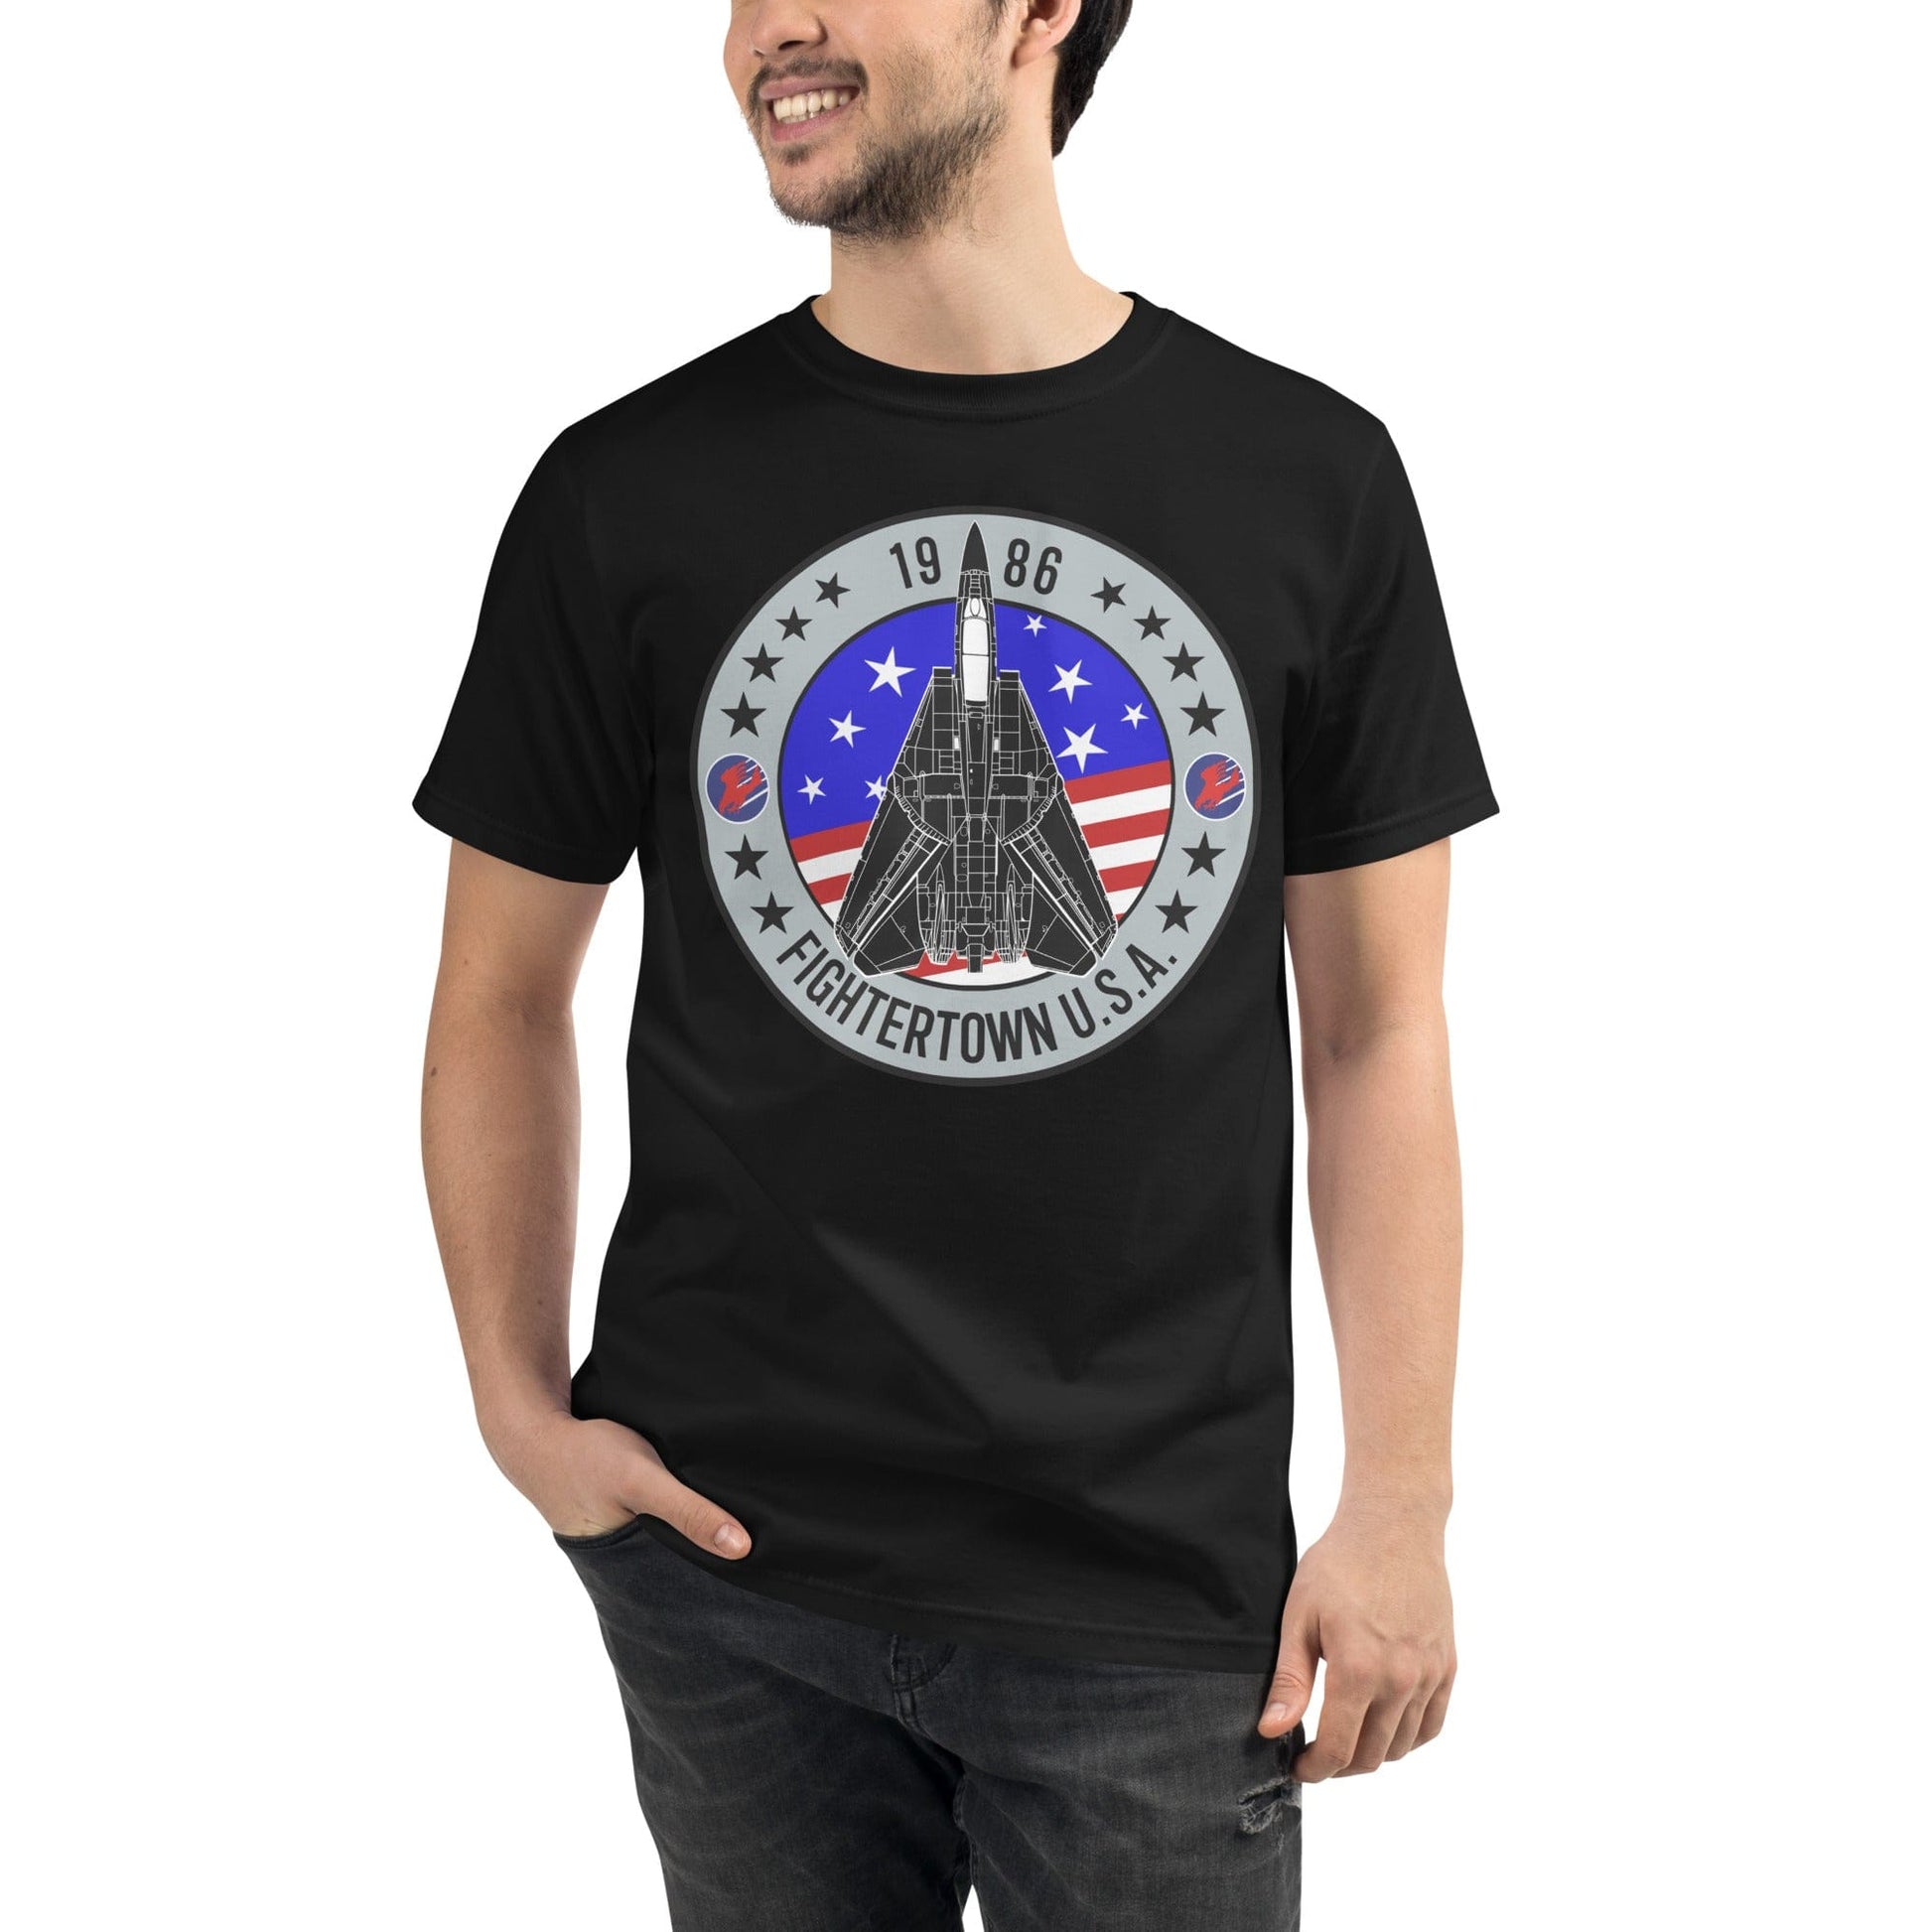 Top Gun Fans Shirts & Tops Black / S F-14 Tomcat Fightertown Organic T-Shirt